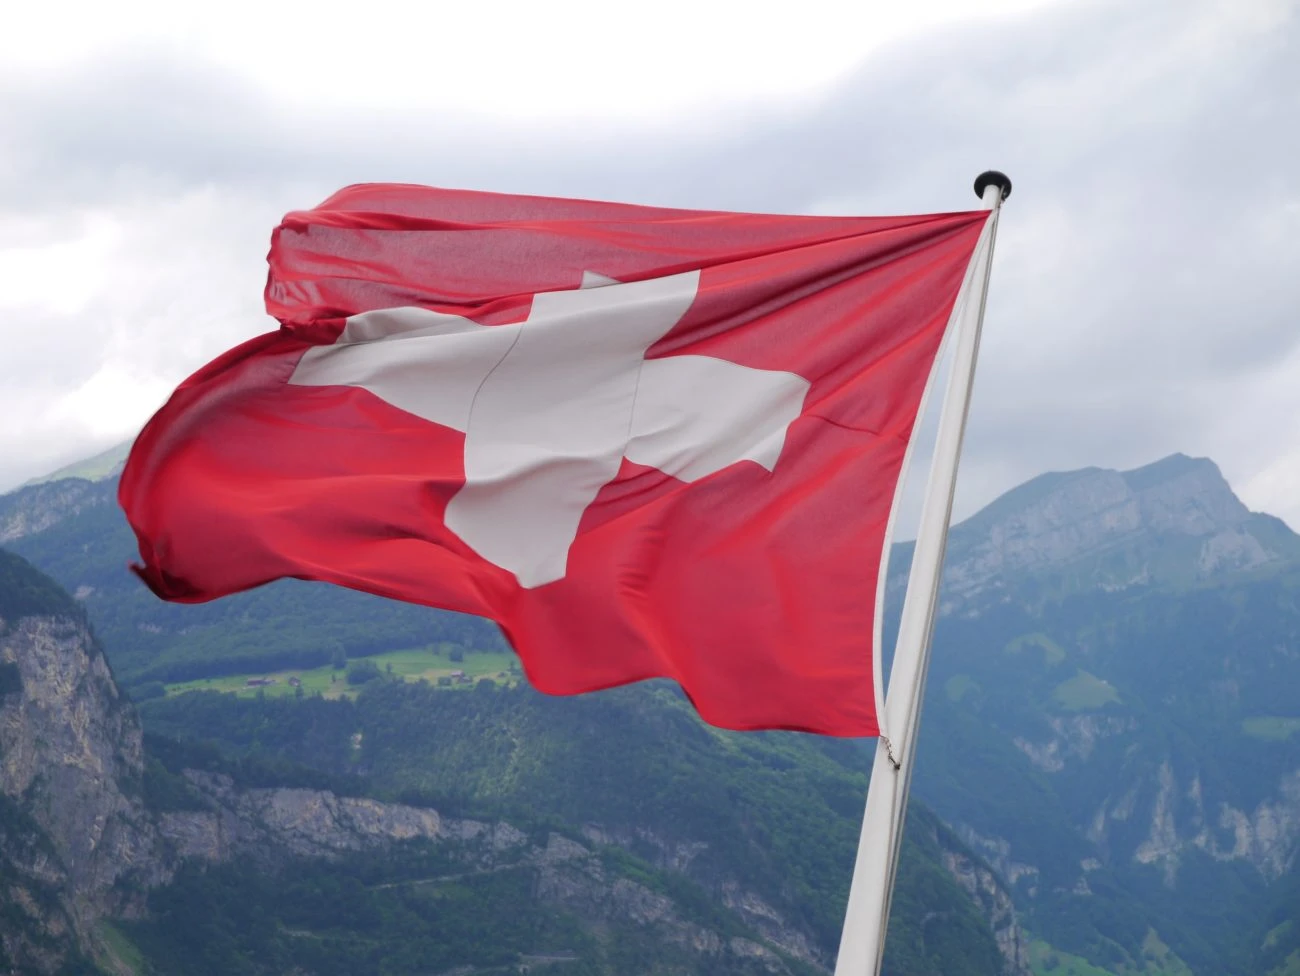 Swiss regulator Gespa appoints Cina as president